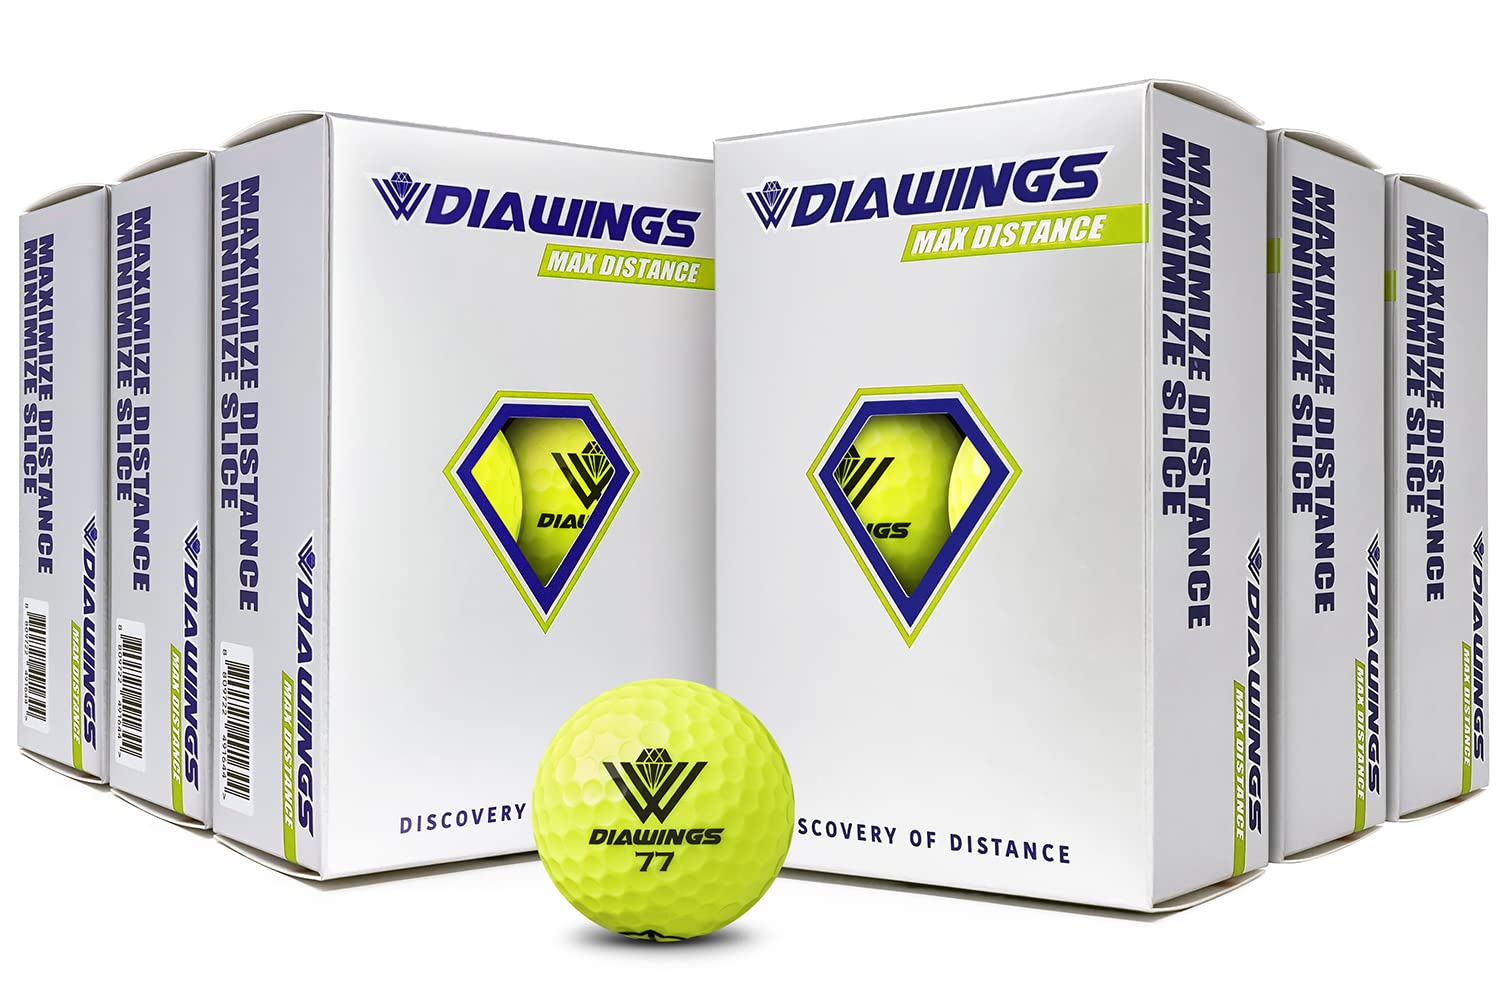 Diawings Max Distance Golf Balls